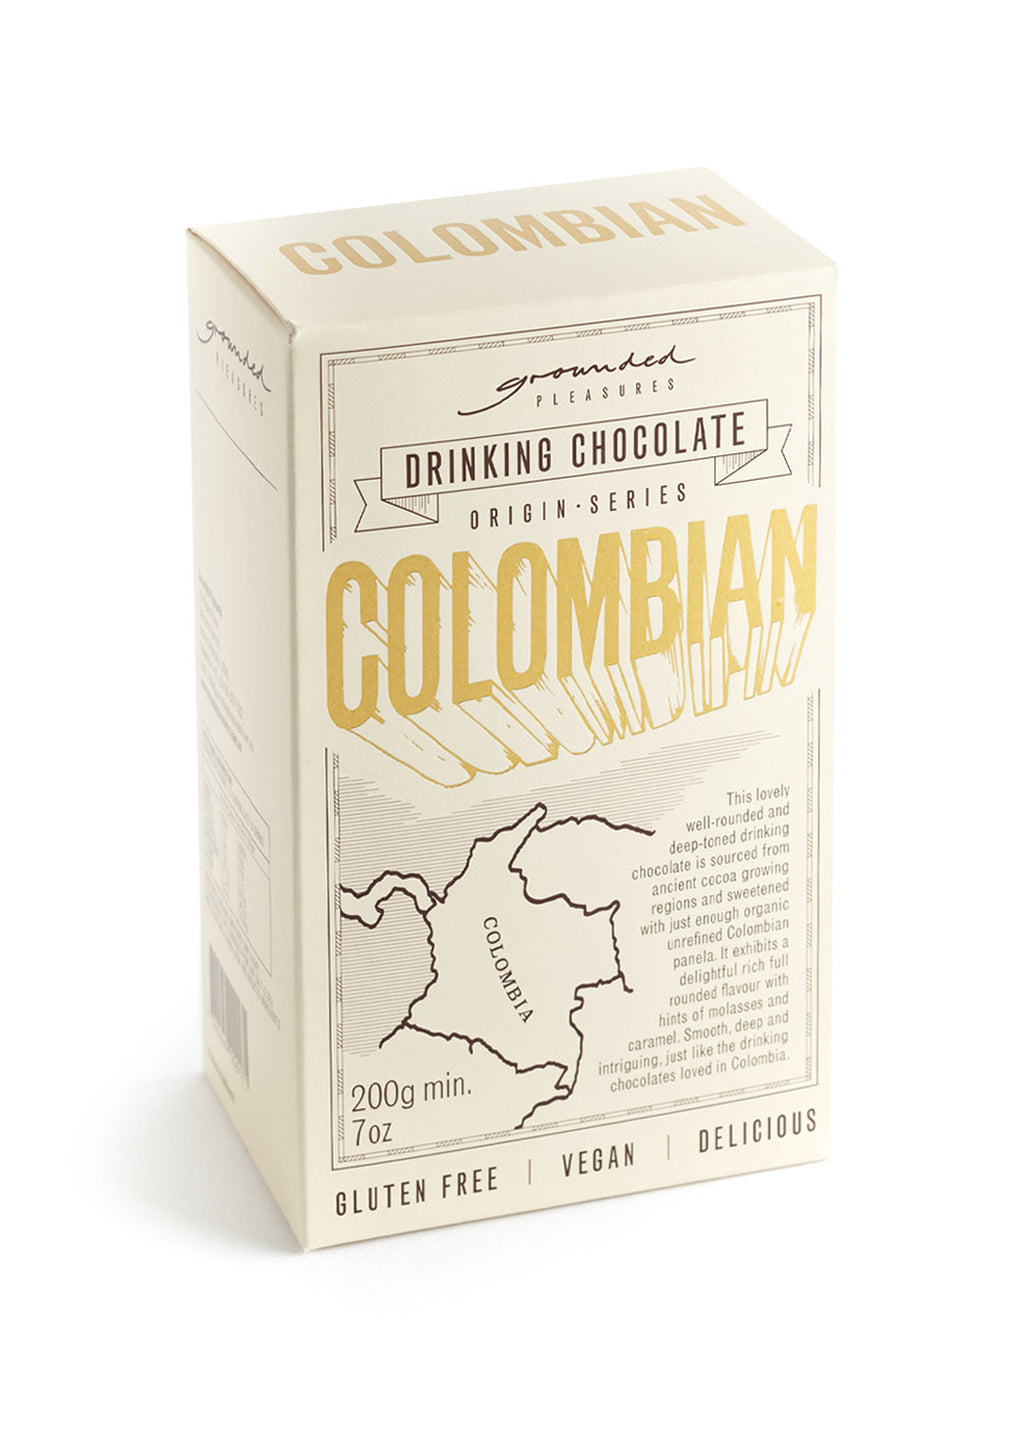 COLOMBIAN ORIGIN SERIES